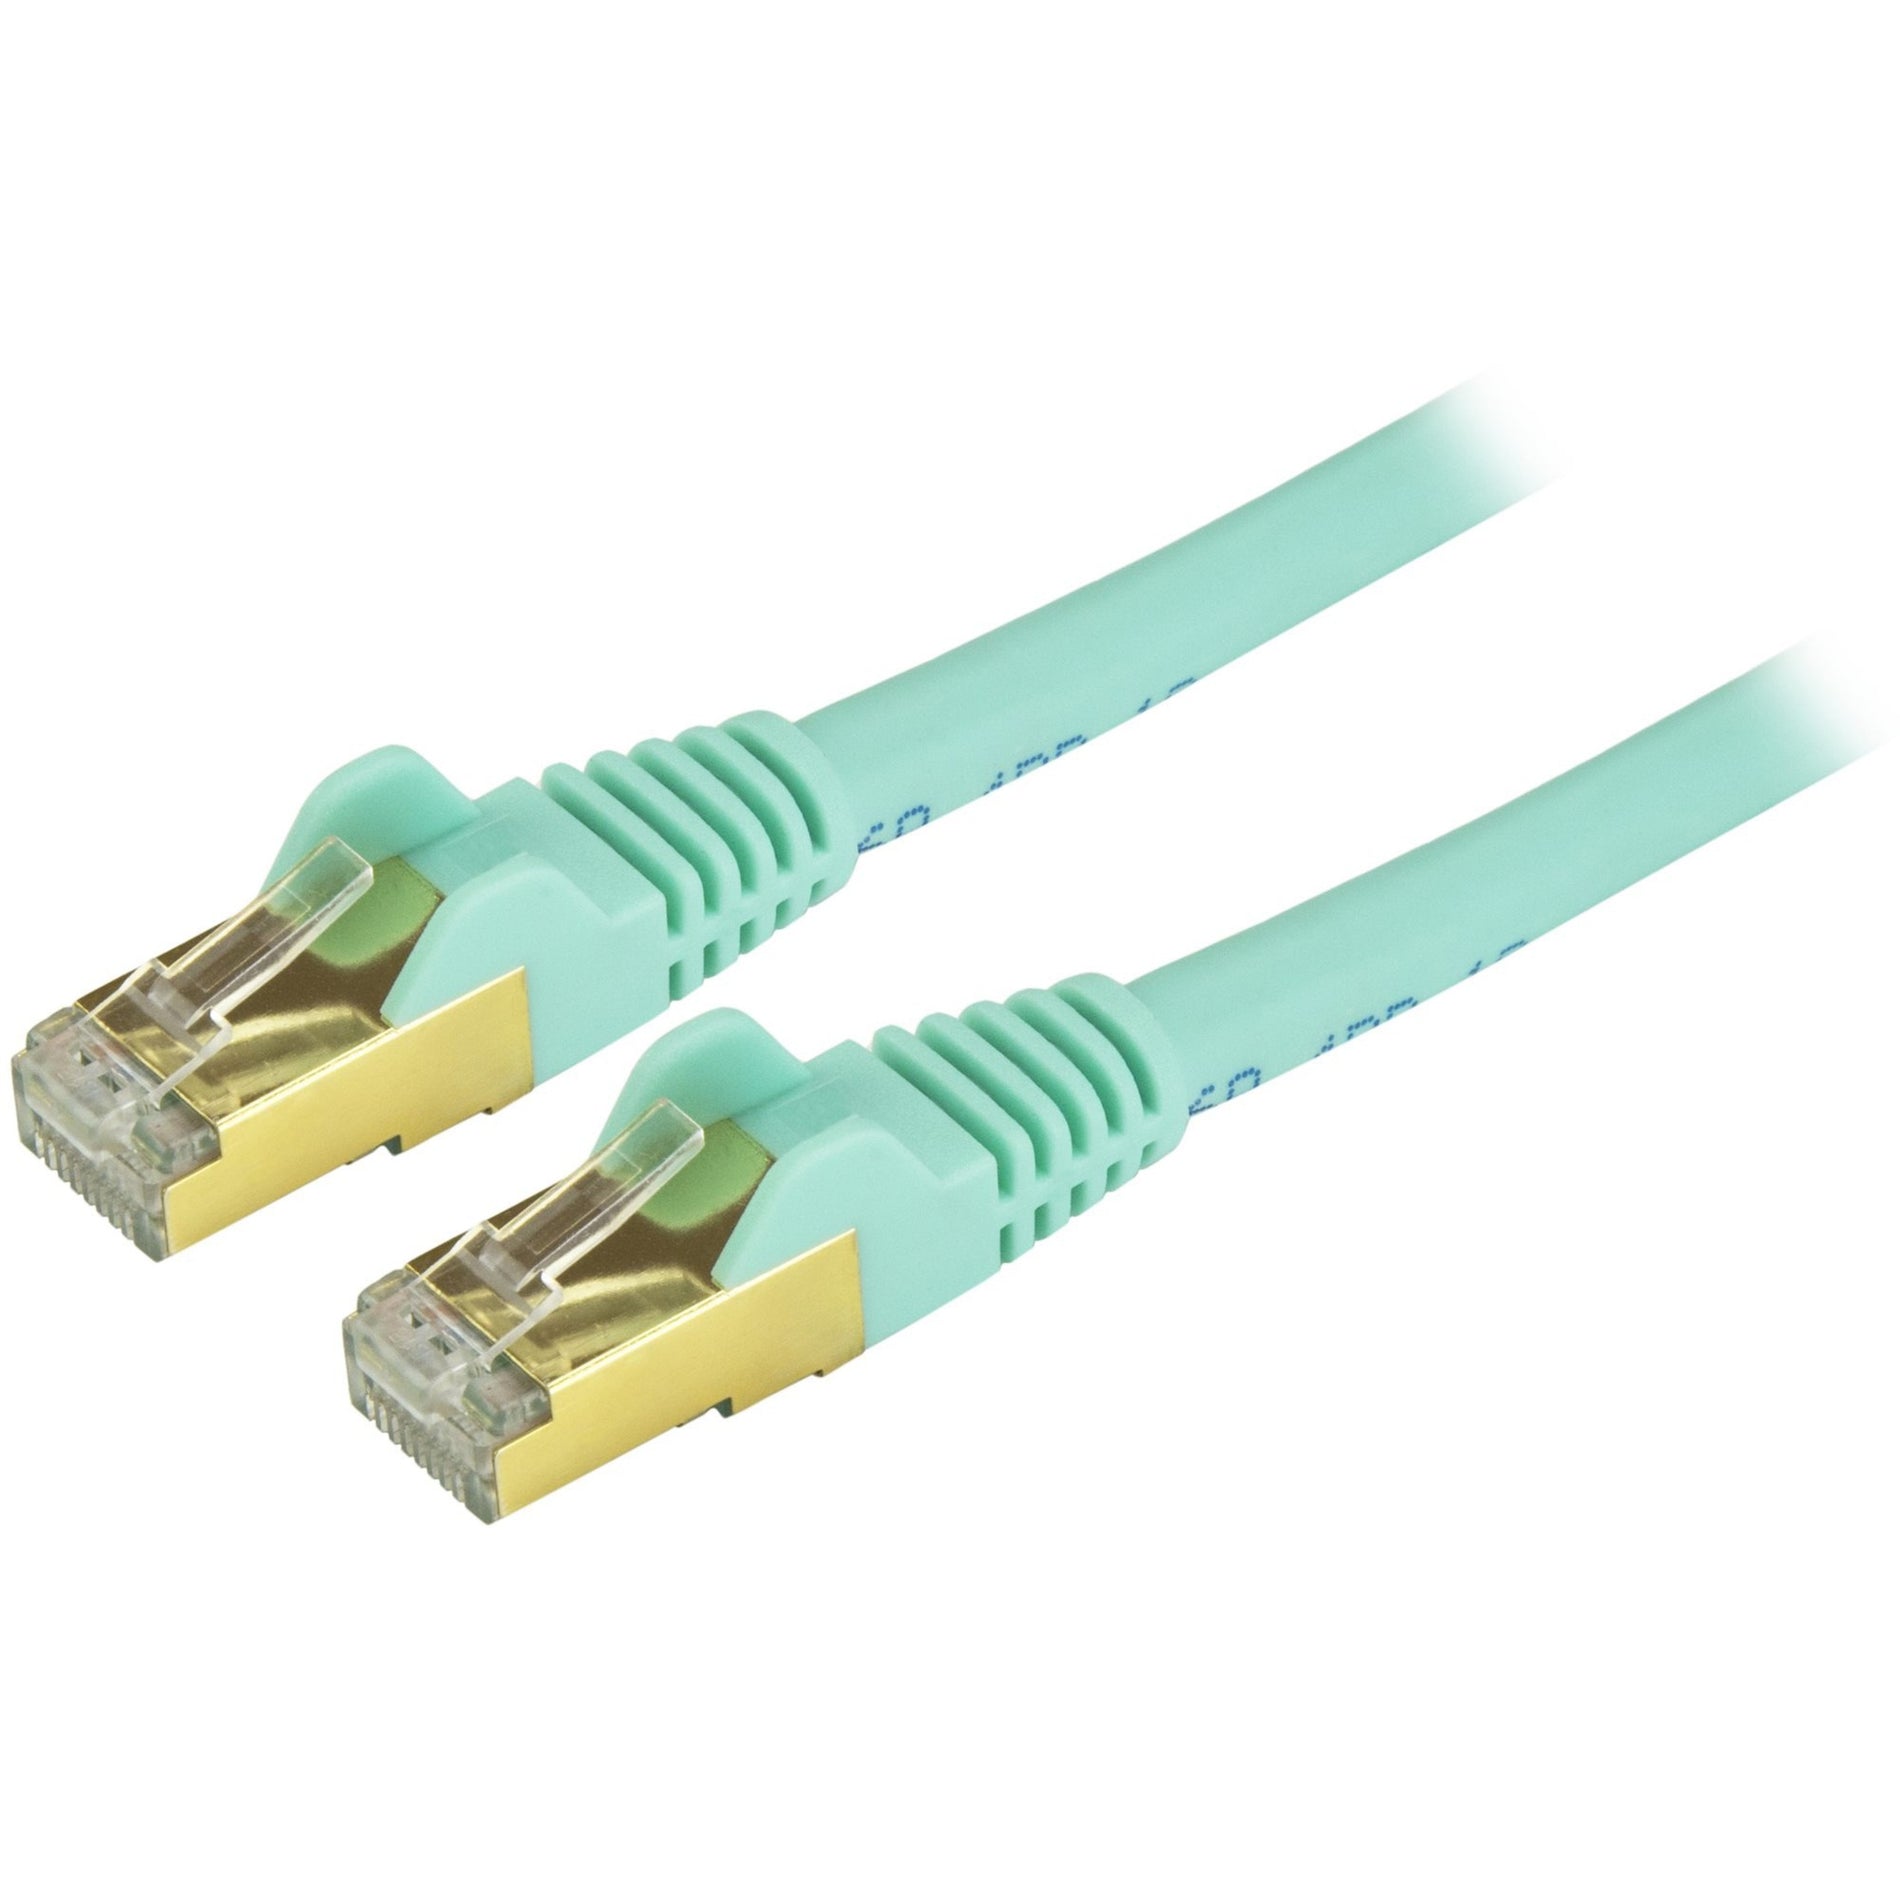 StarTech.com C6ASPAT8AQ Cat6a Ethernet Patch Cable - Shielded (STP) - 8 ft., Aqua, Snagless RJ45 Ethernet Cord